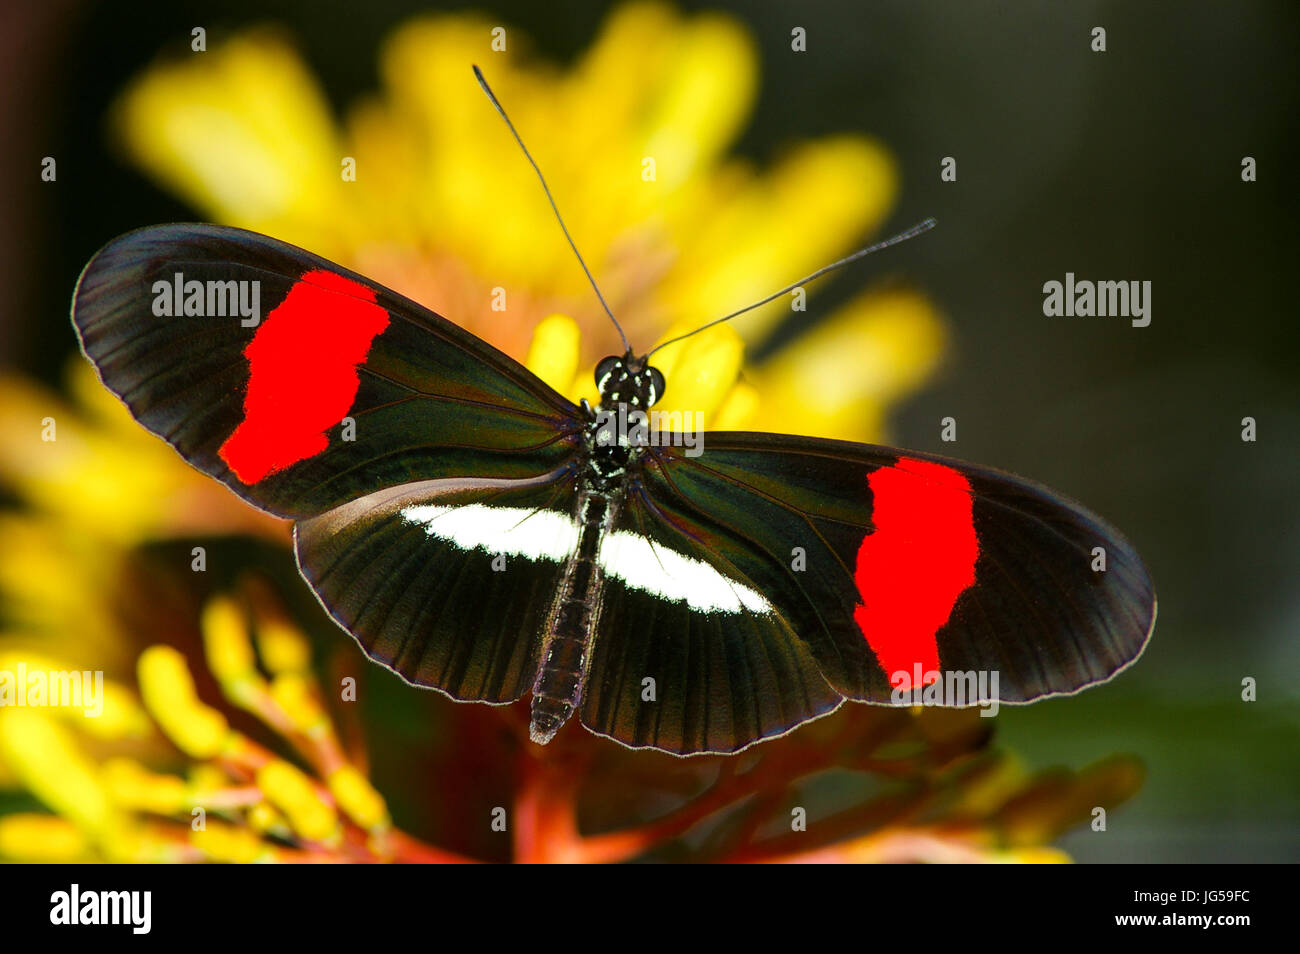 Postman butterfly Heliconius melpomene image taken in Panama Stock Photo